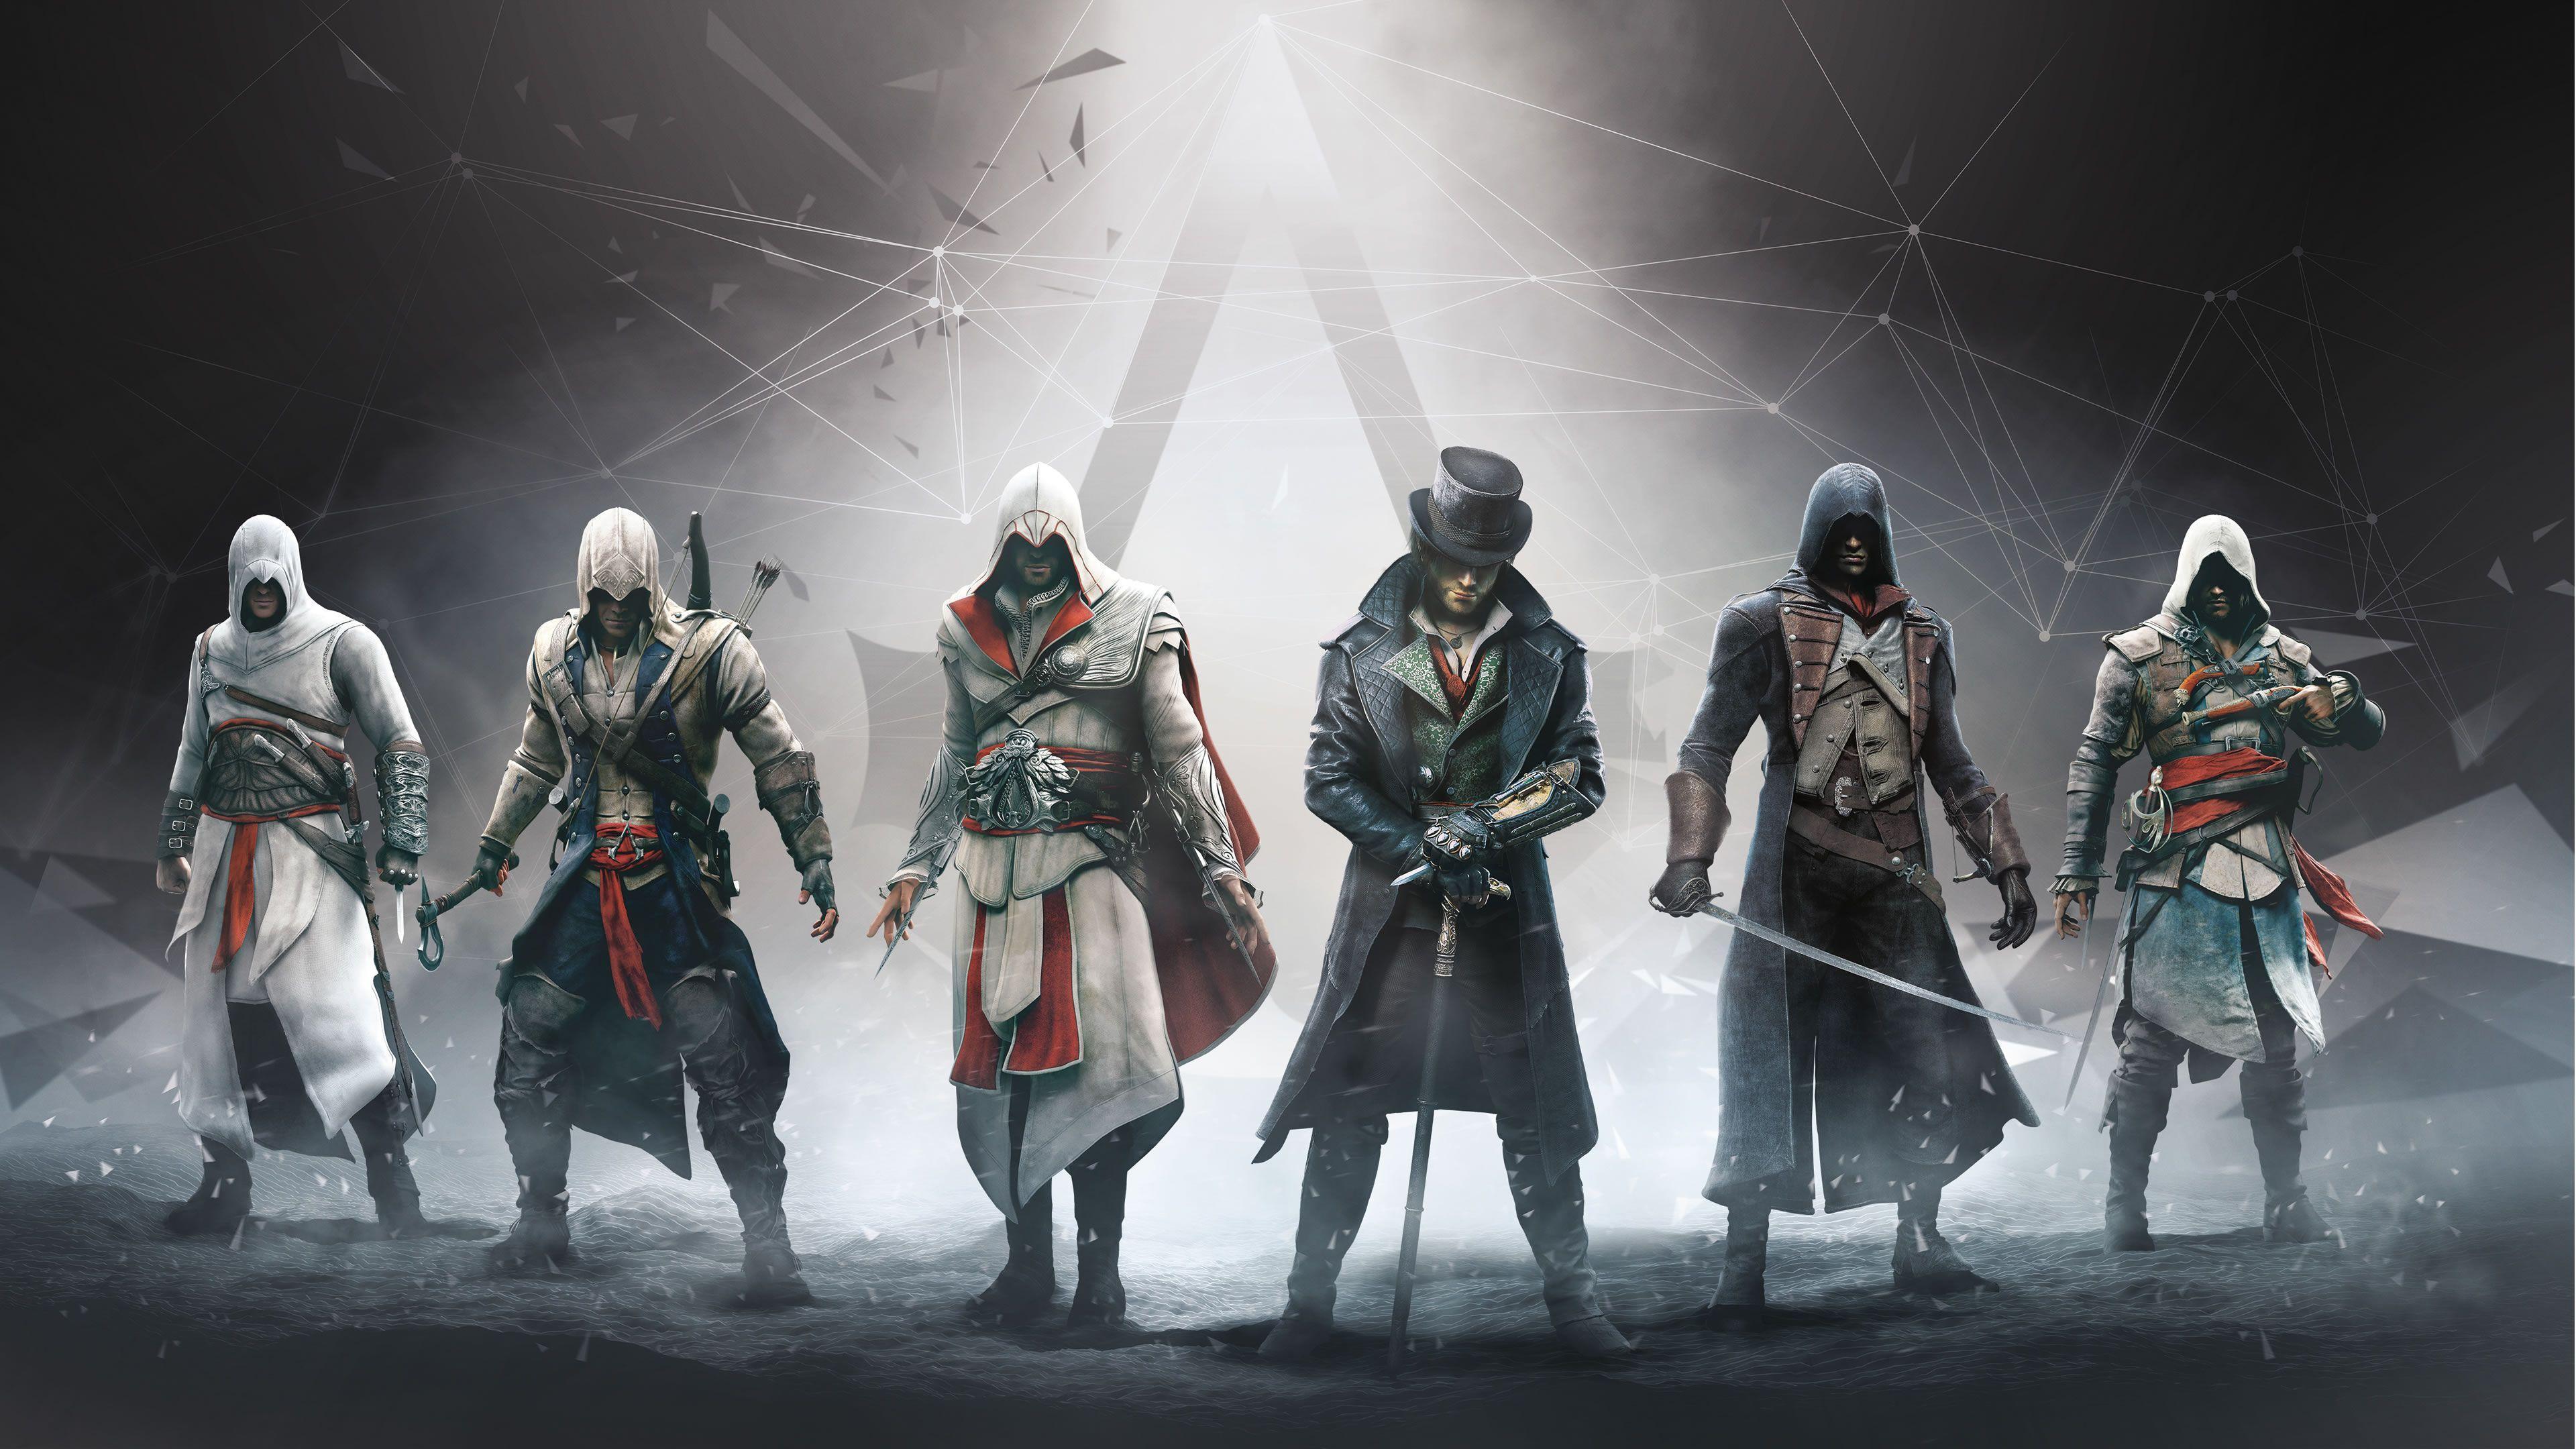 Connor (Assassin's Creed) HD Wallpaper